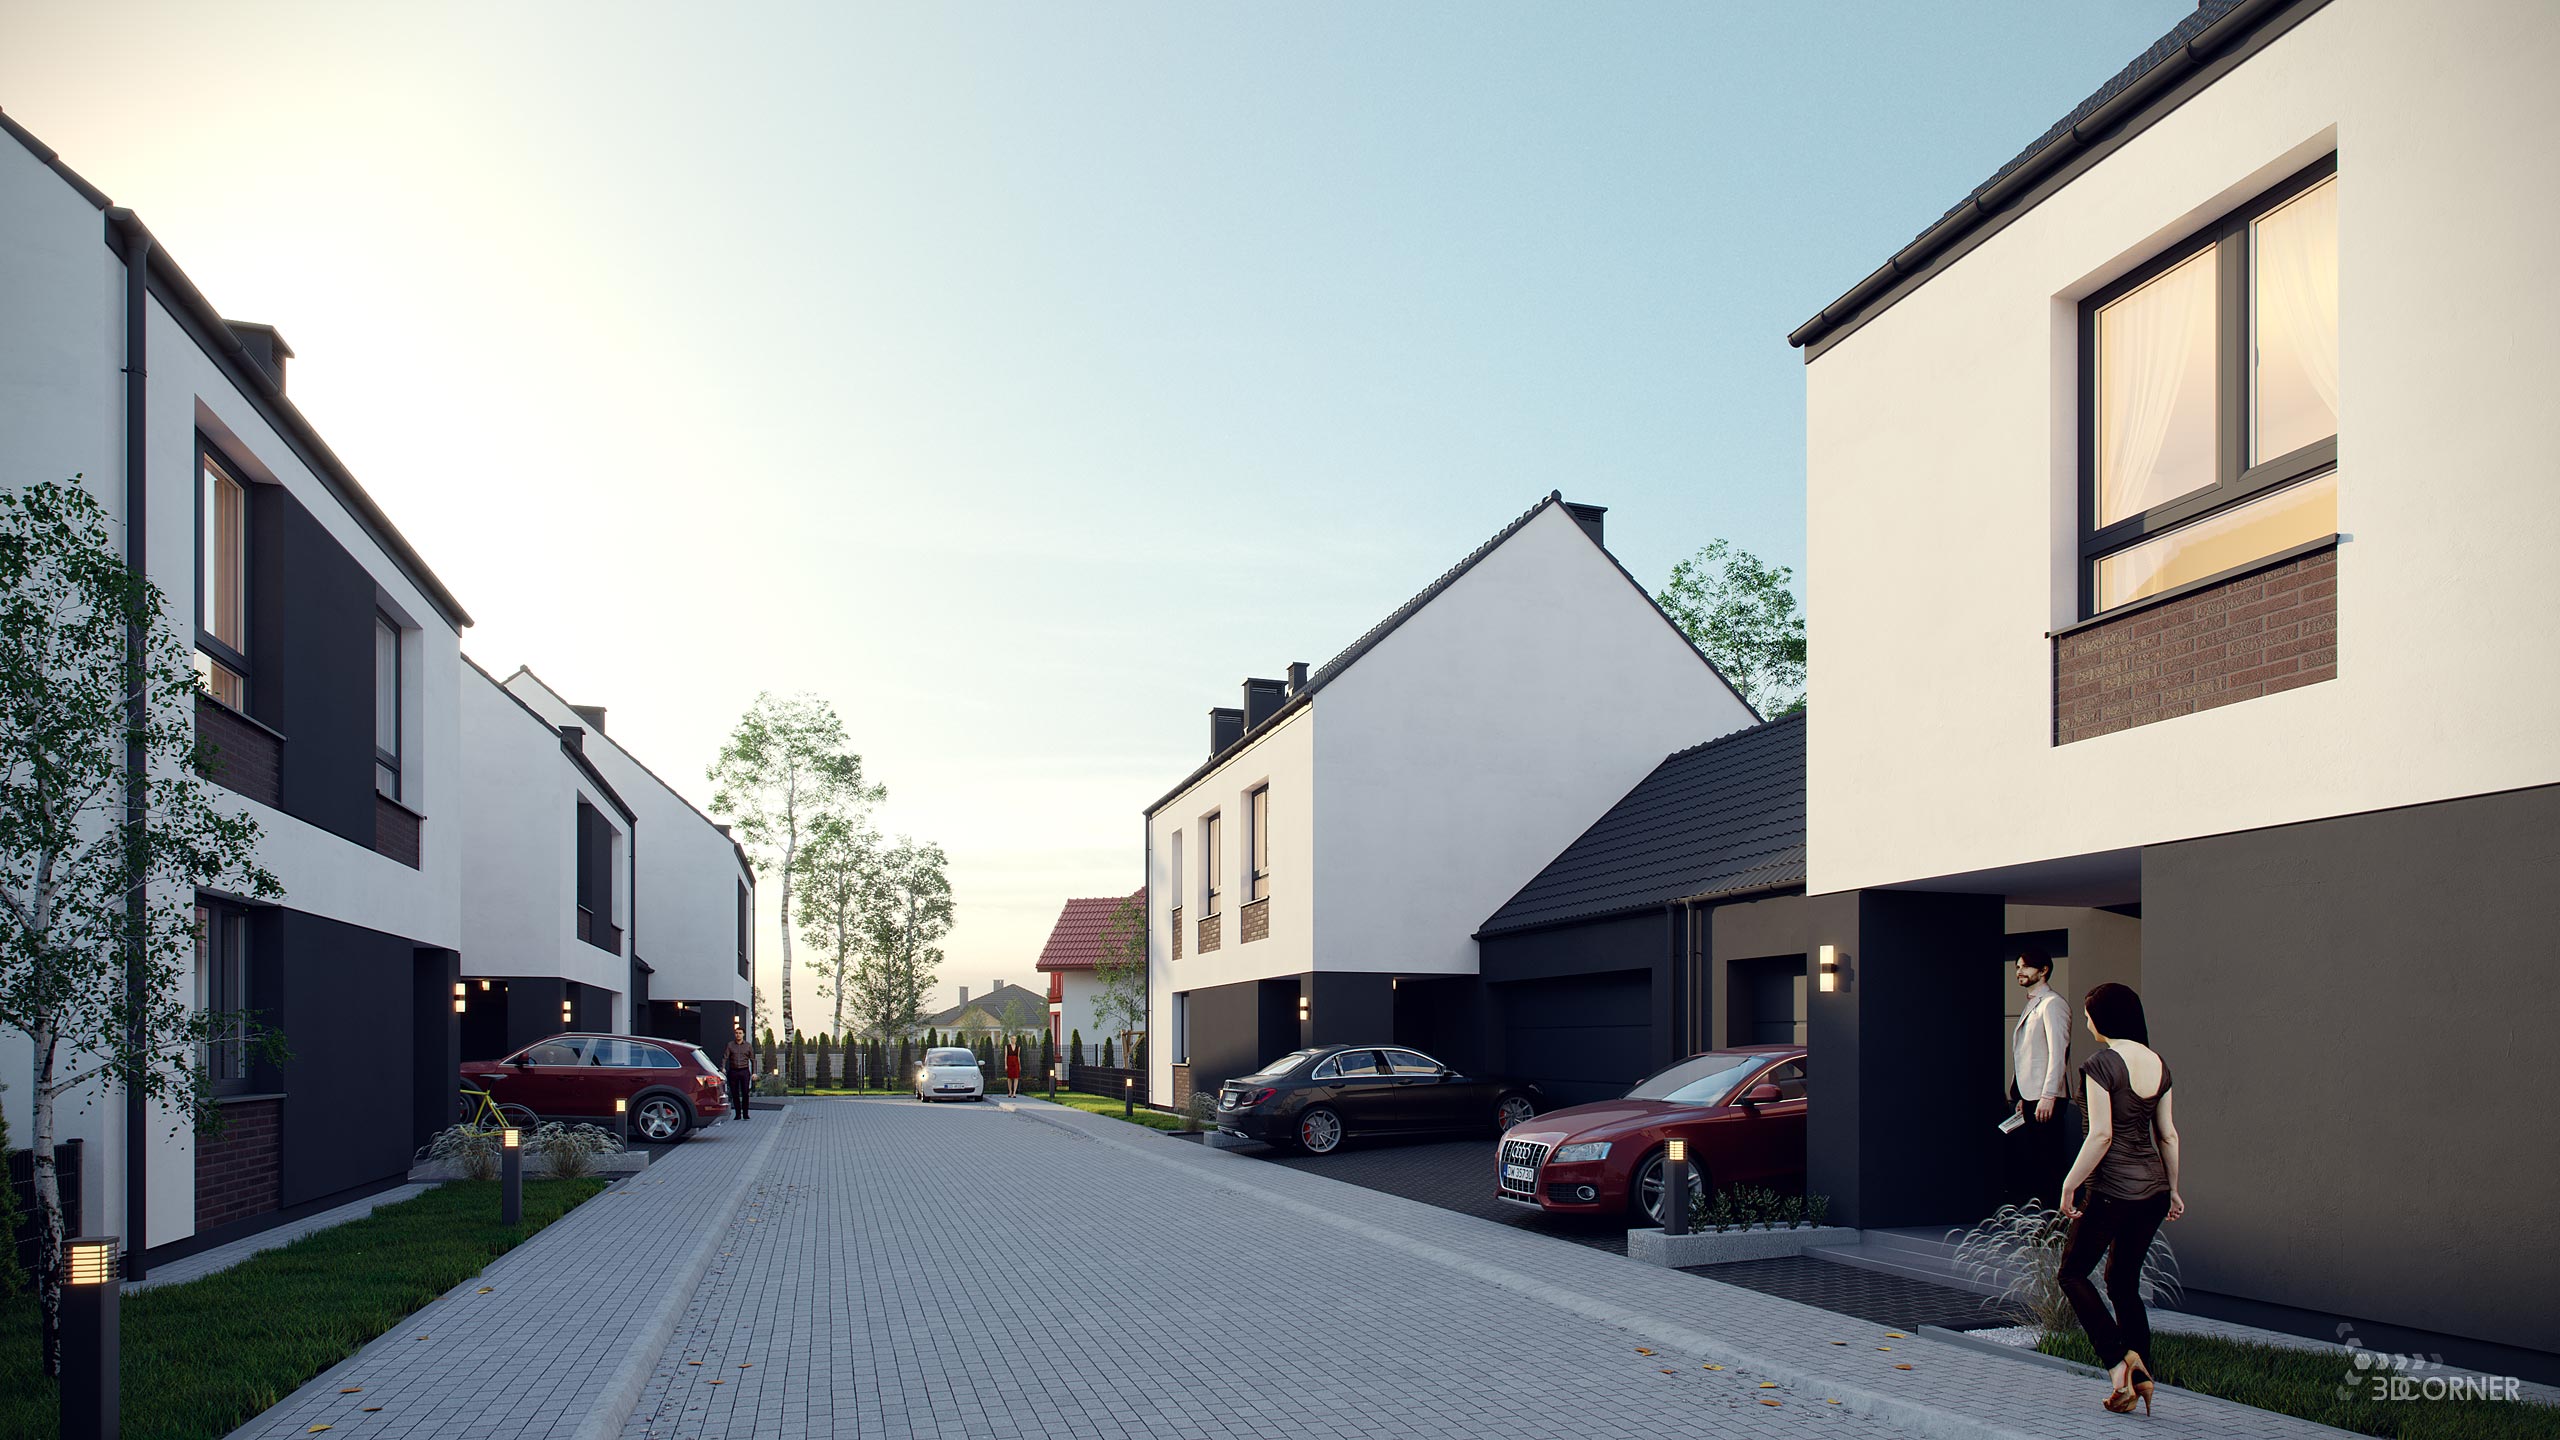 visualization exterior photorealistic modern residential architecture 3dcorner